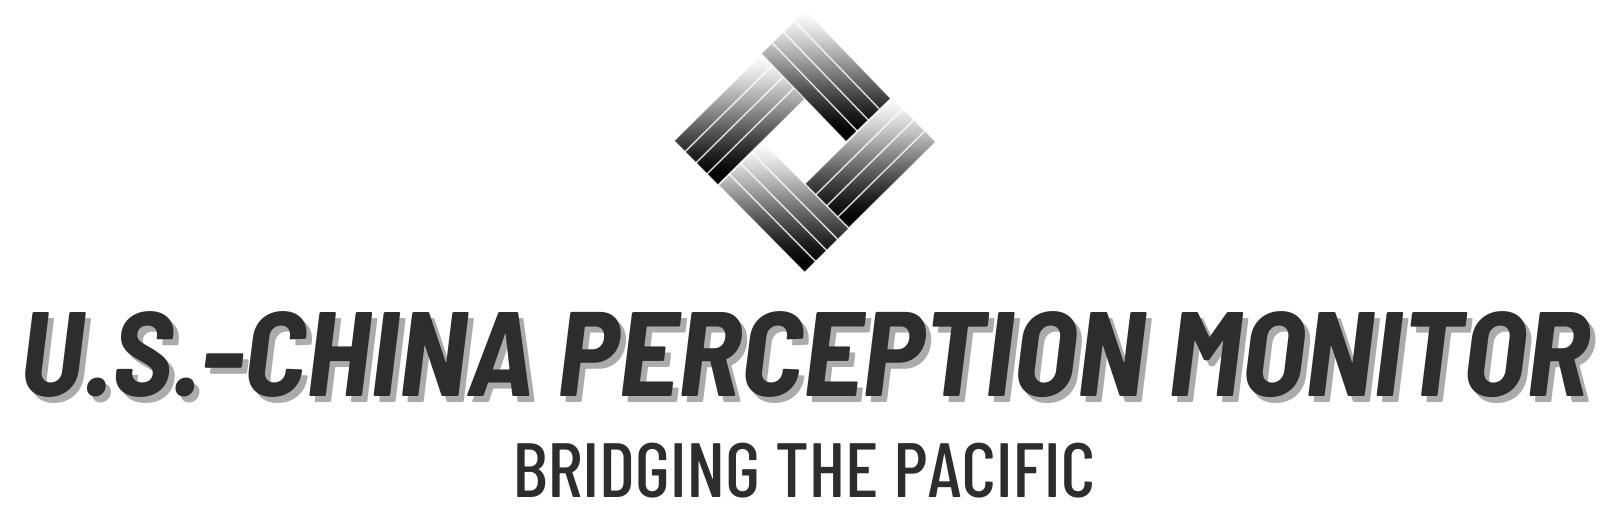 US China Perception Monitor logo